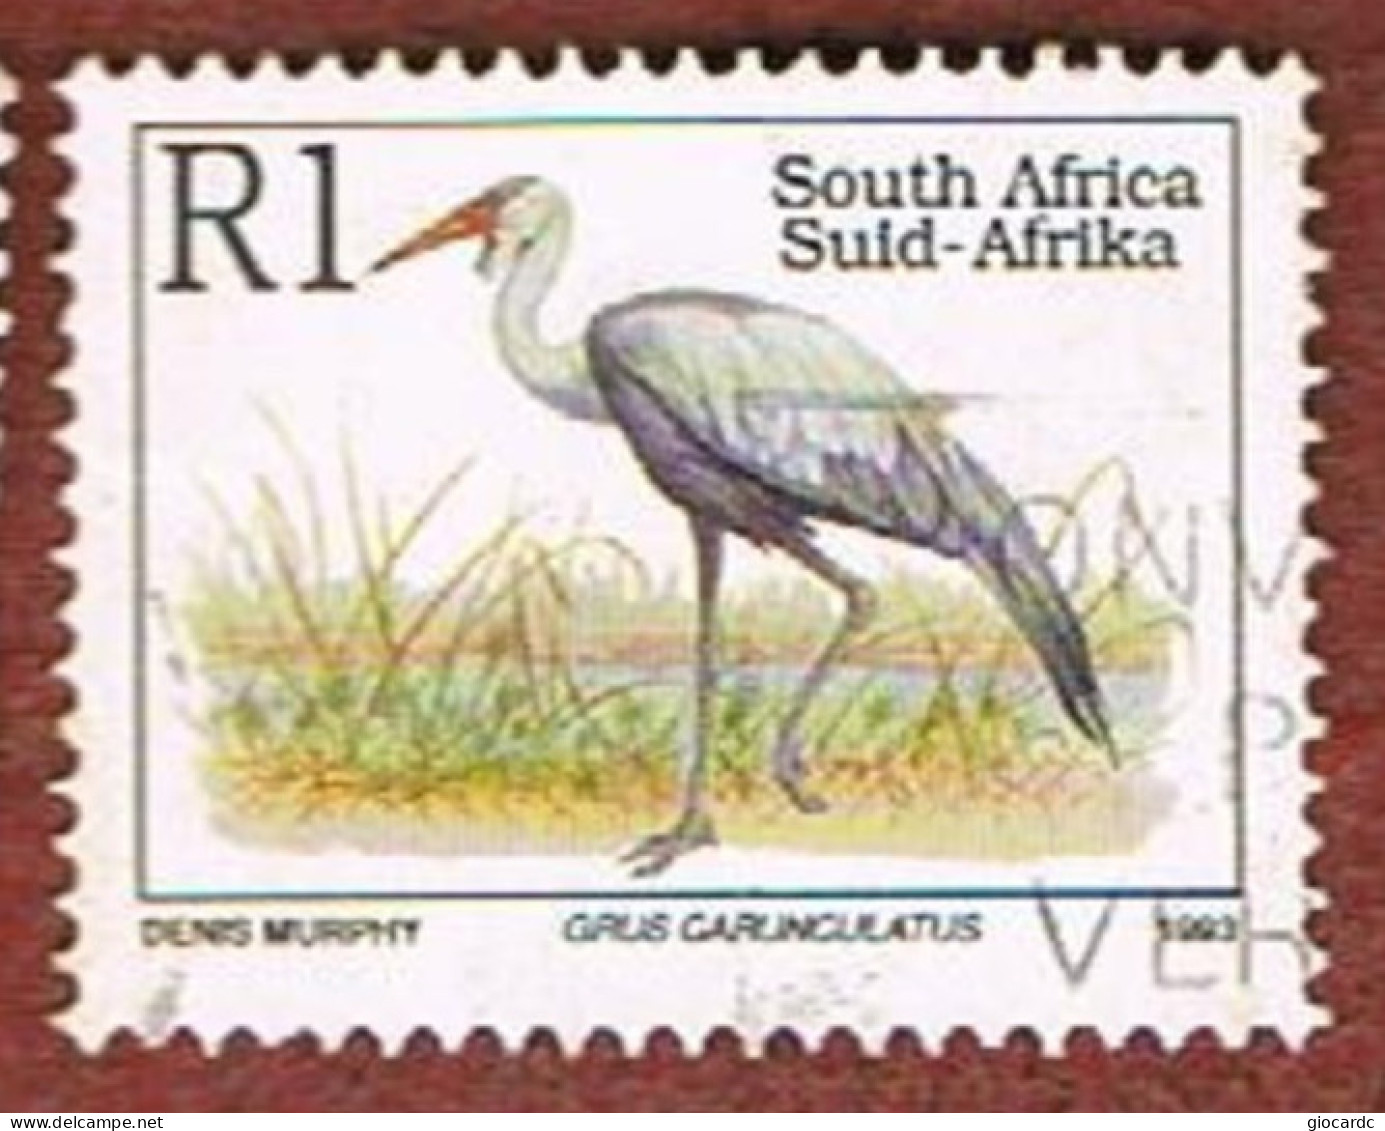 SUD AFRICA (SOUTH AFRICA) - SG 817c - 1993 ENDANGERED ANIMALS: WATTLED CRANE   - USED - Oblitérés